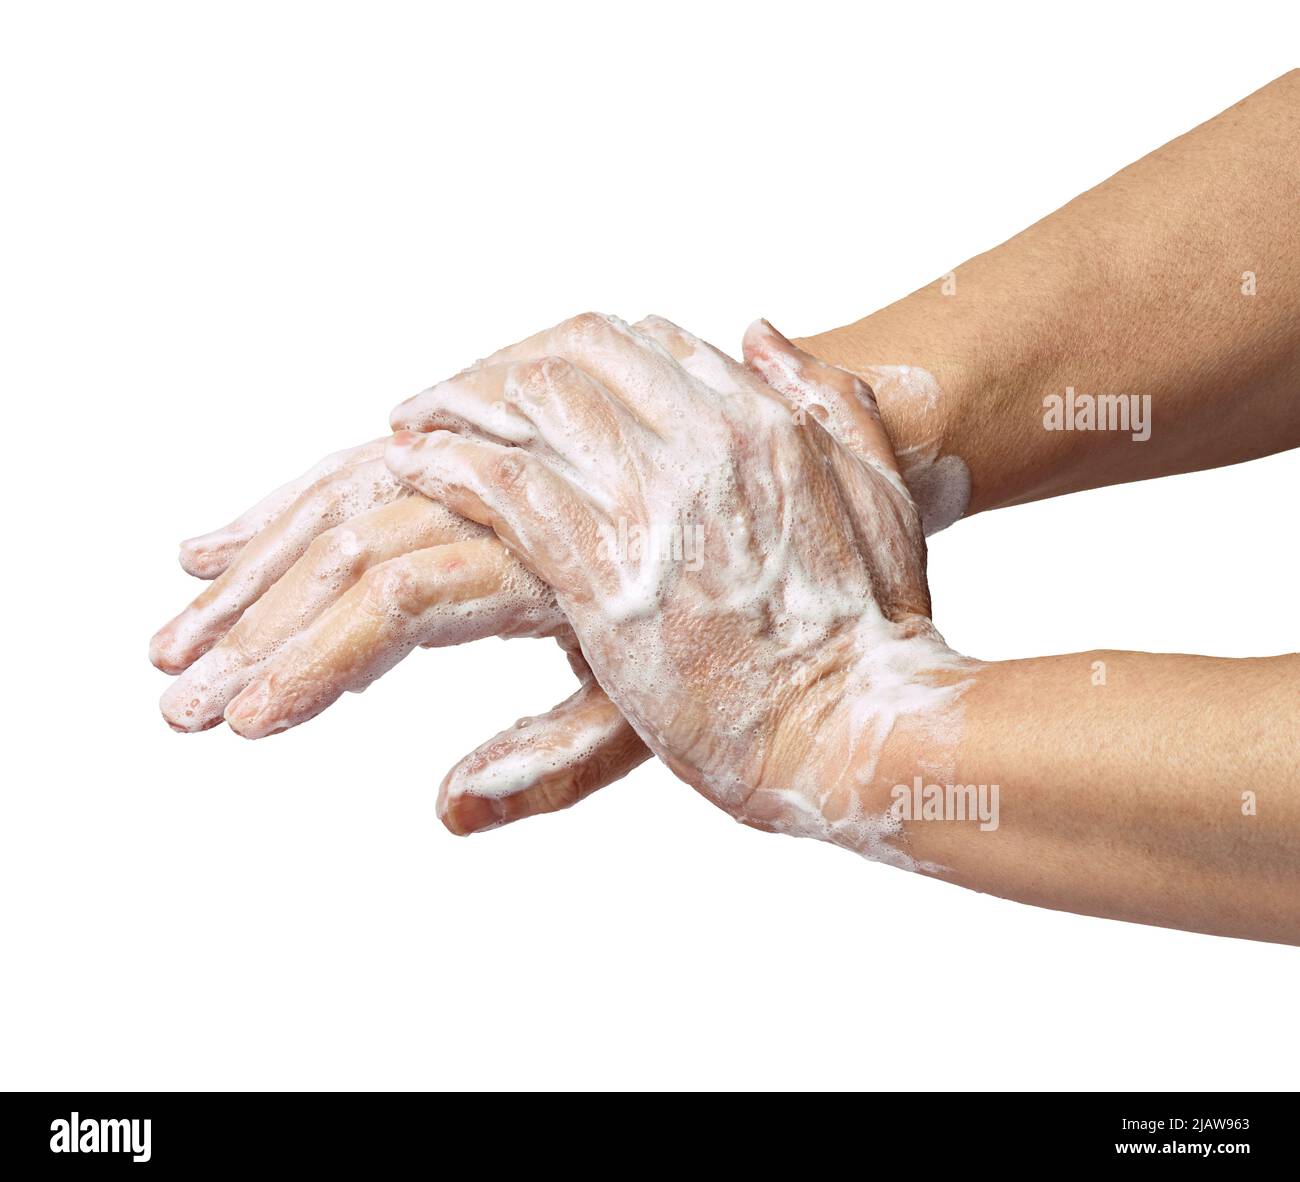 hand washing soap hygiene clean virus edpidemic disease corona flue bathroom water Stock Photo